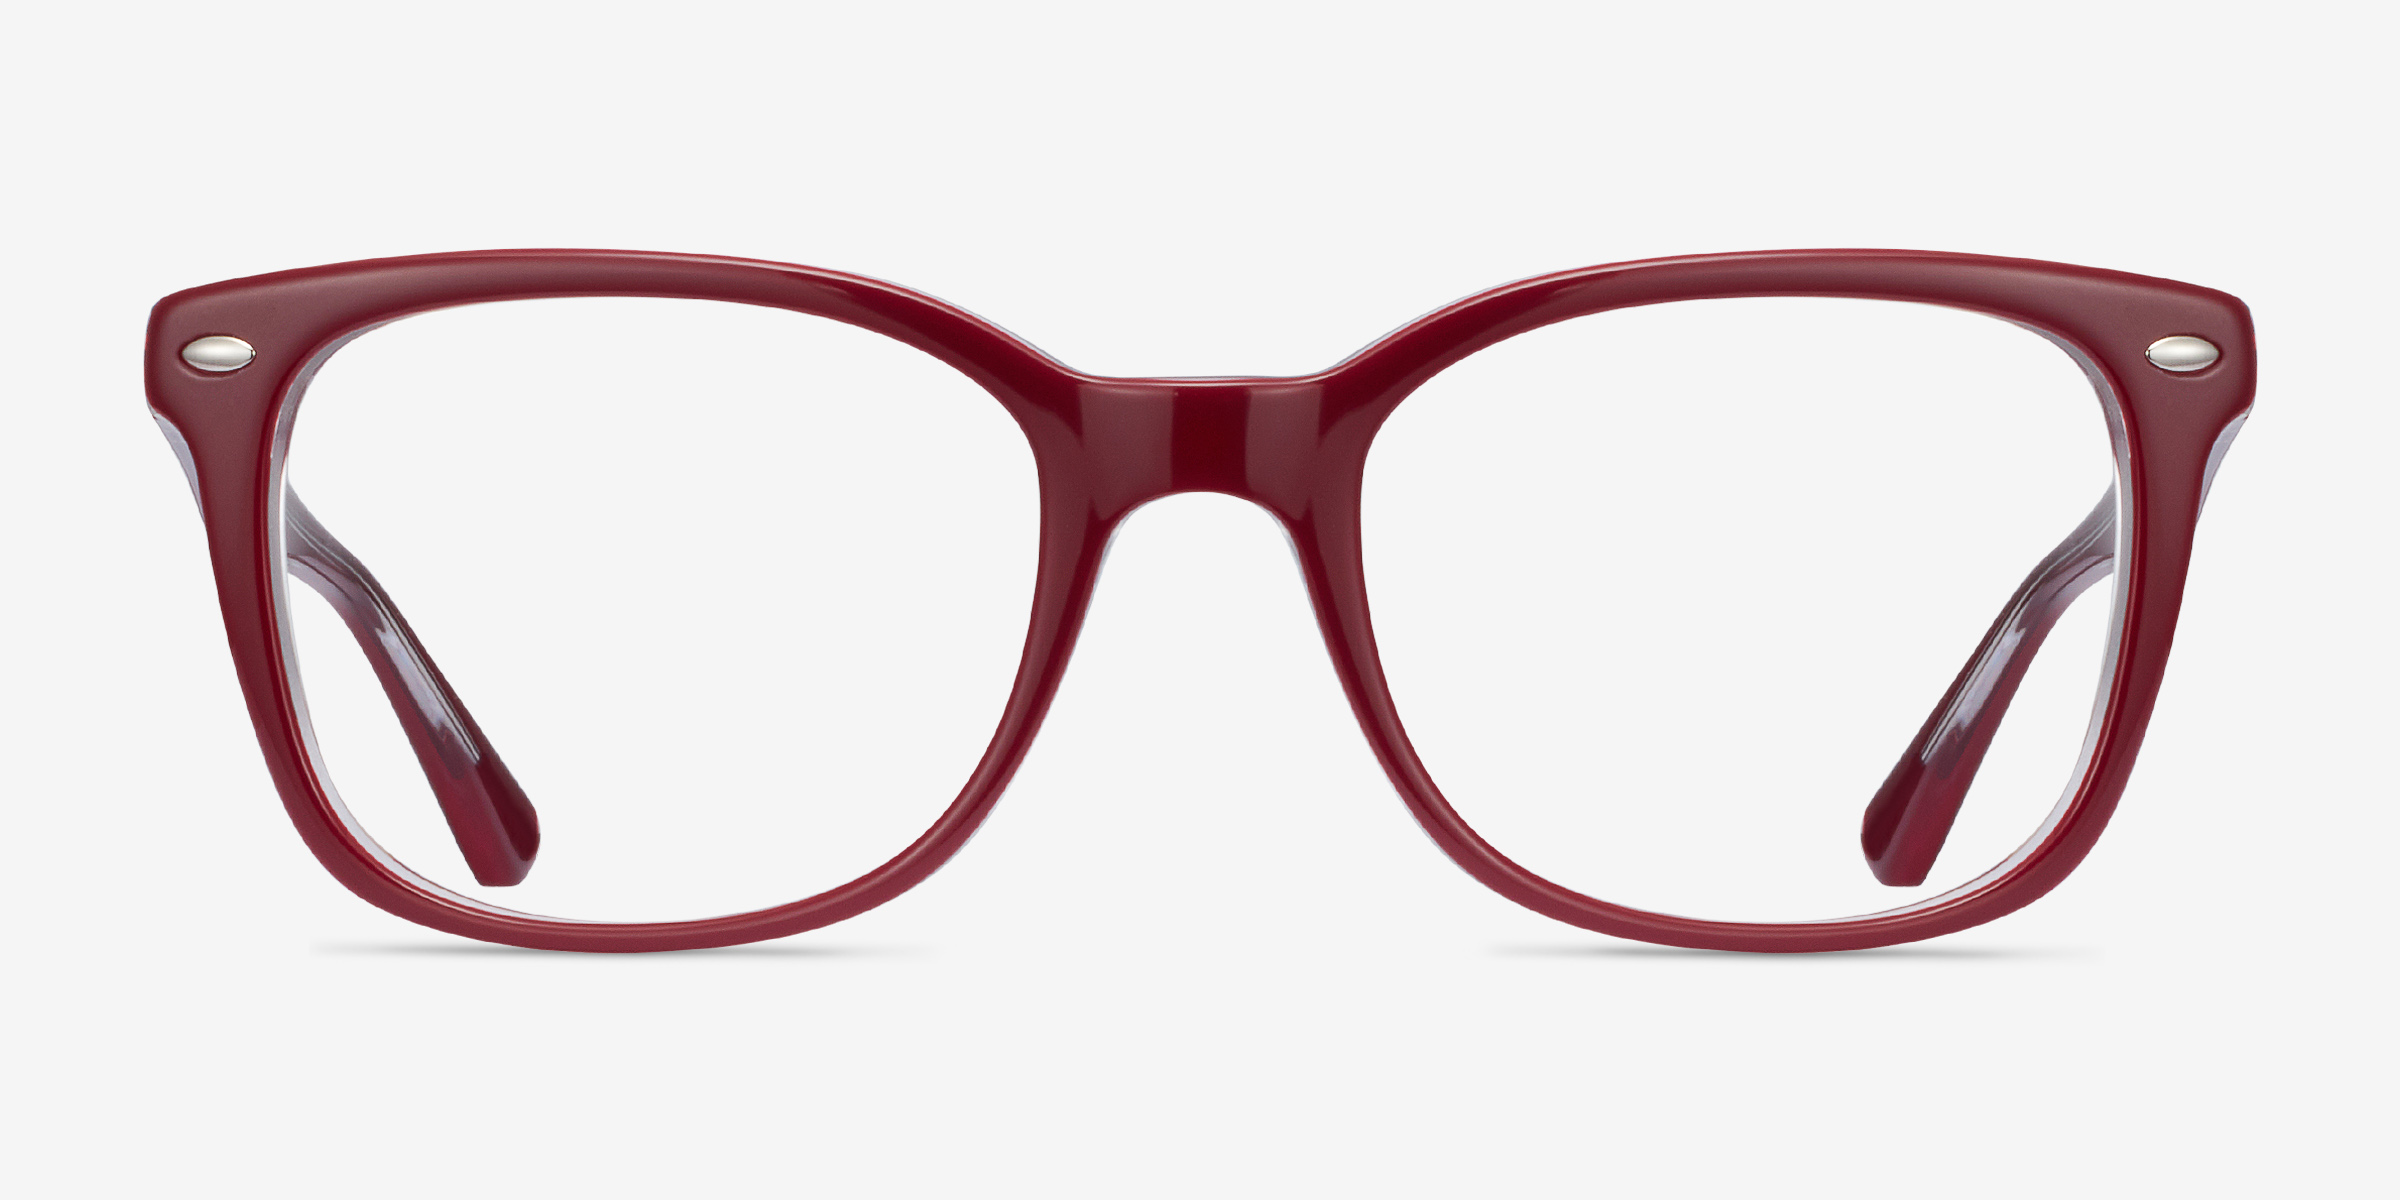 Ray Ban Rb5285 Square Burgundy Frame Eyeglasses Eyebuydirect